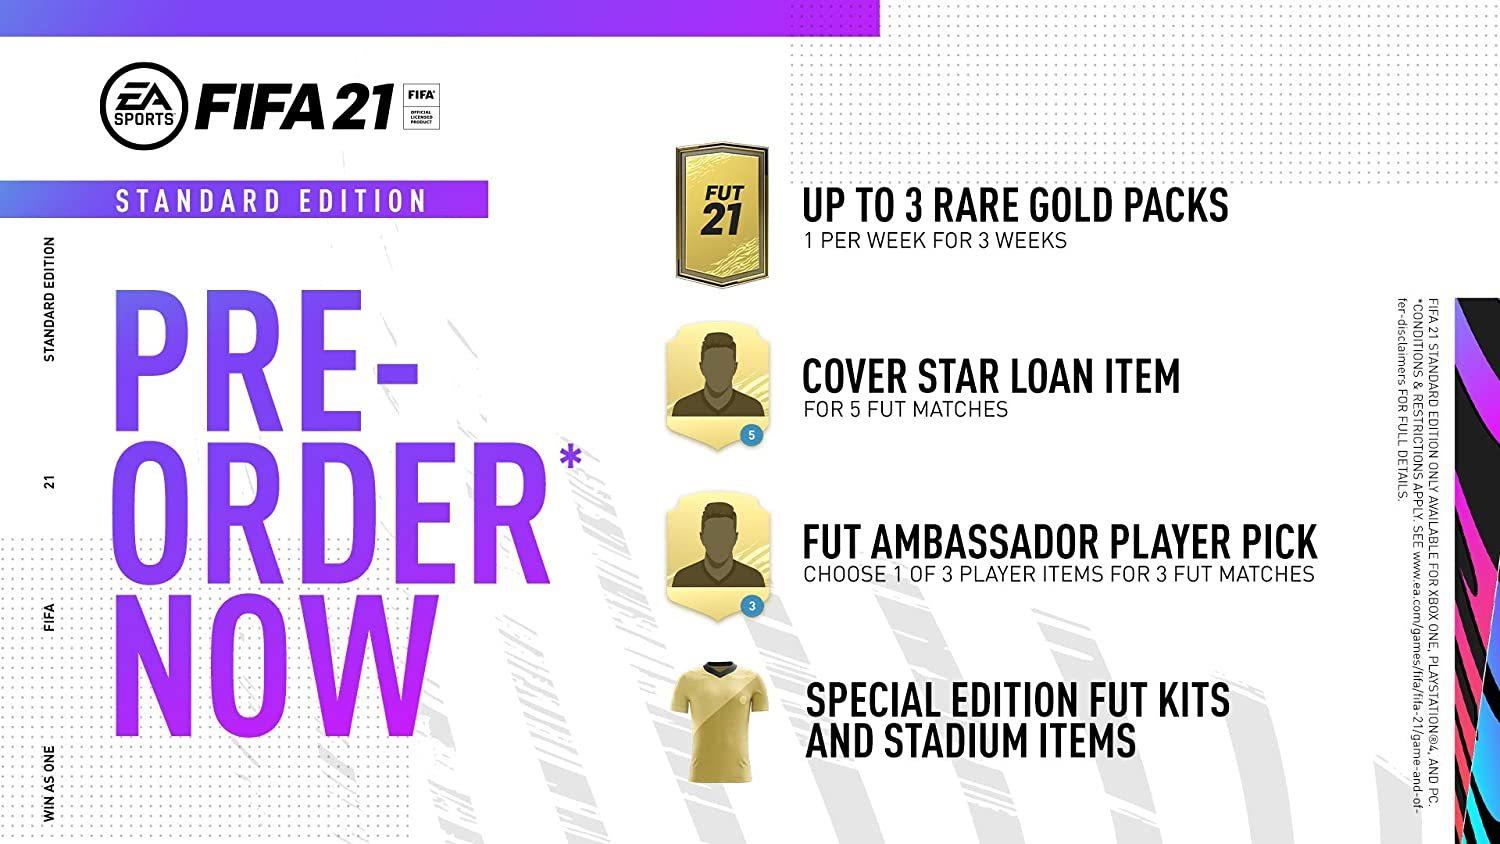 FIFA 21 Standard Edition pre-order rewards